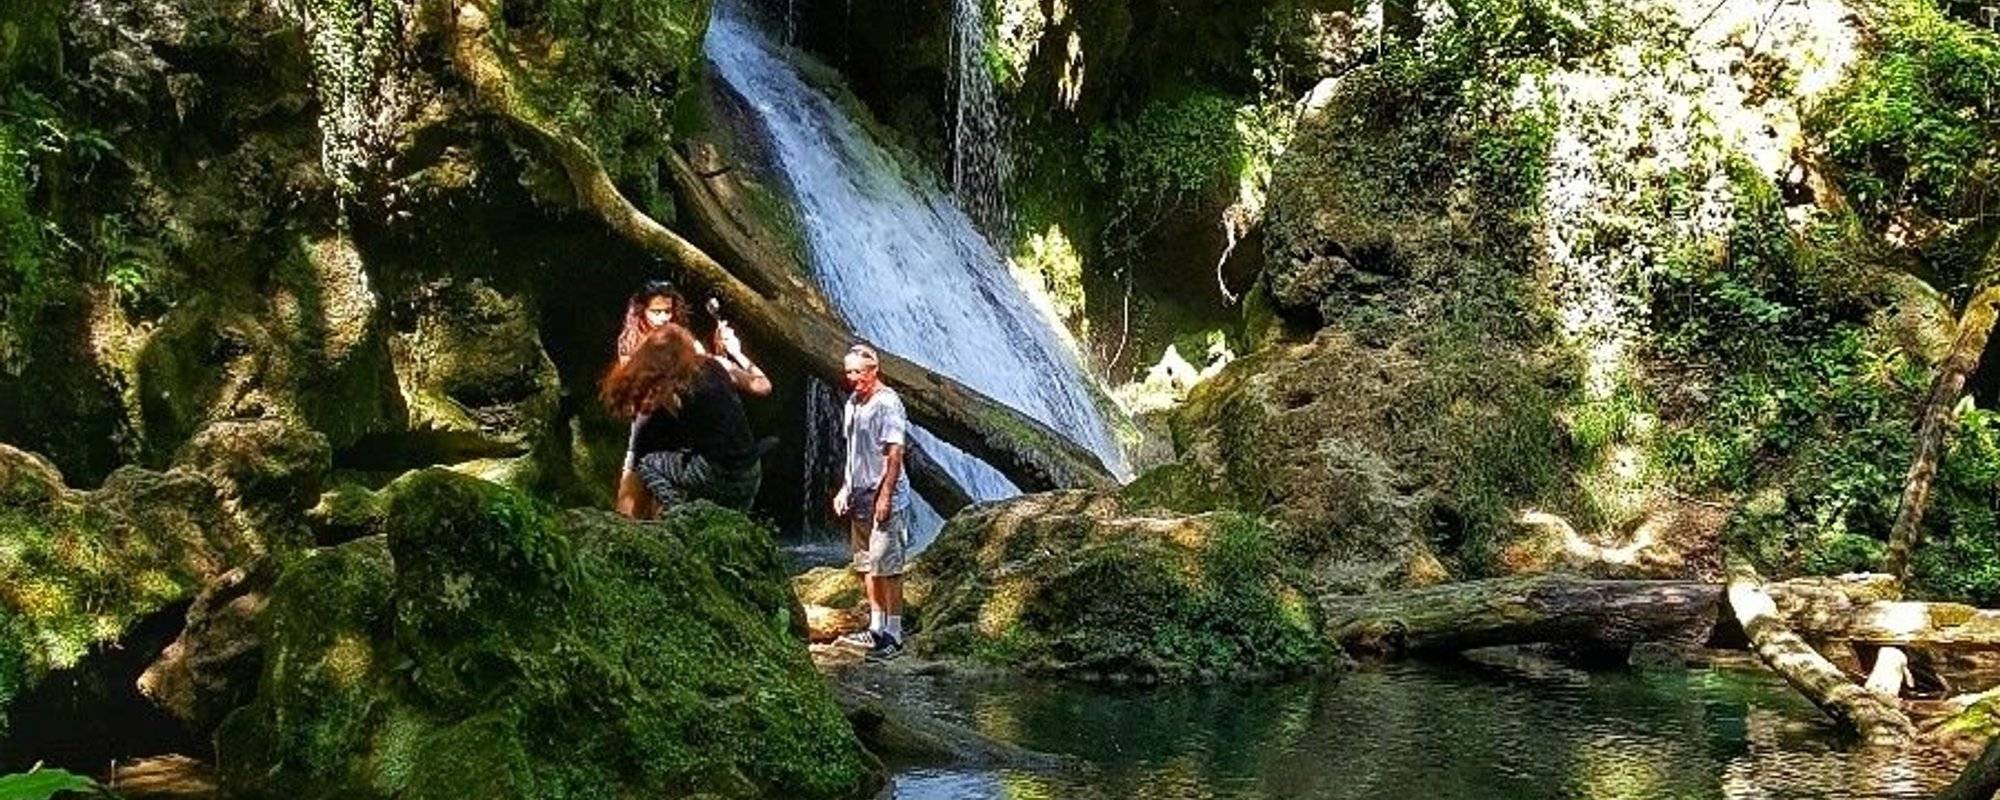 Let's travel together #41 - Vaioaga Waterfall (Cascada Vaioaga)